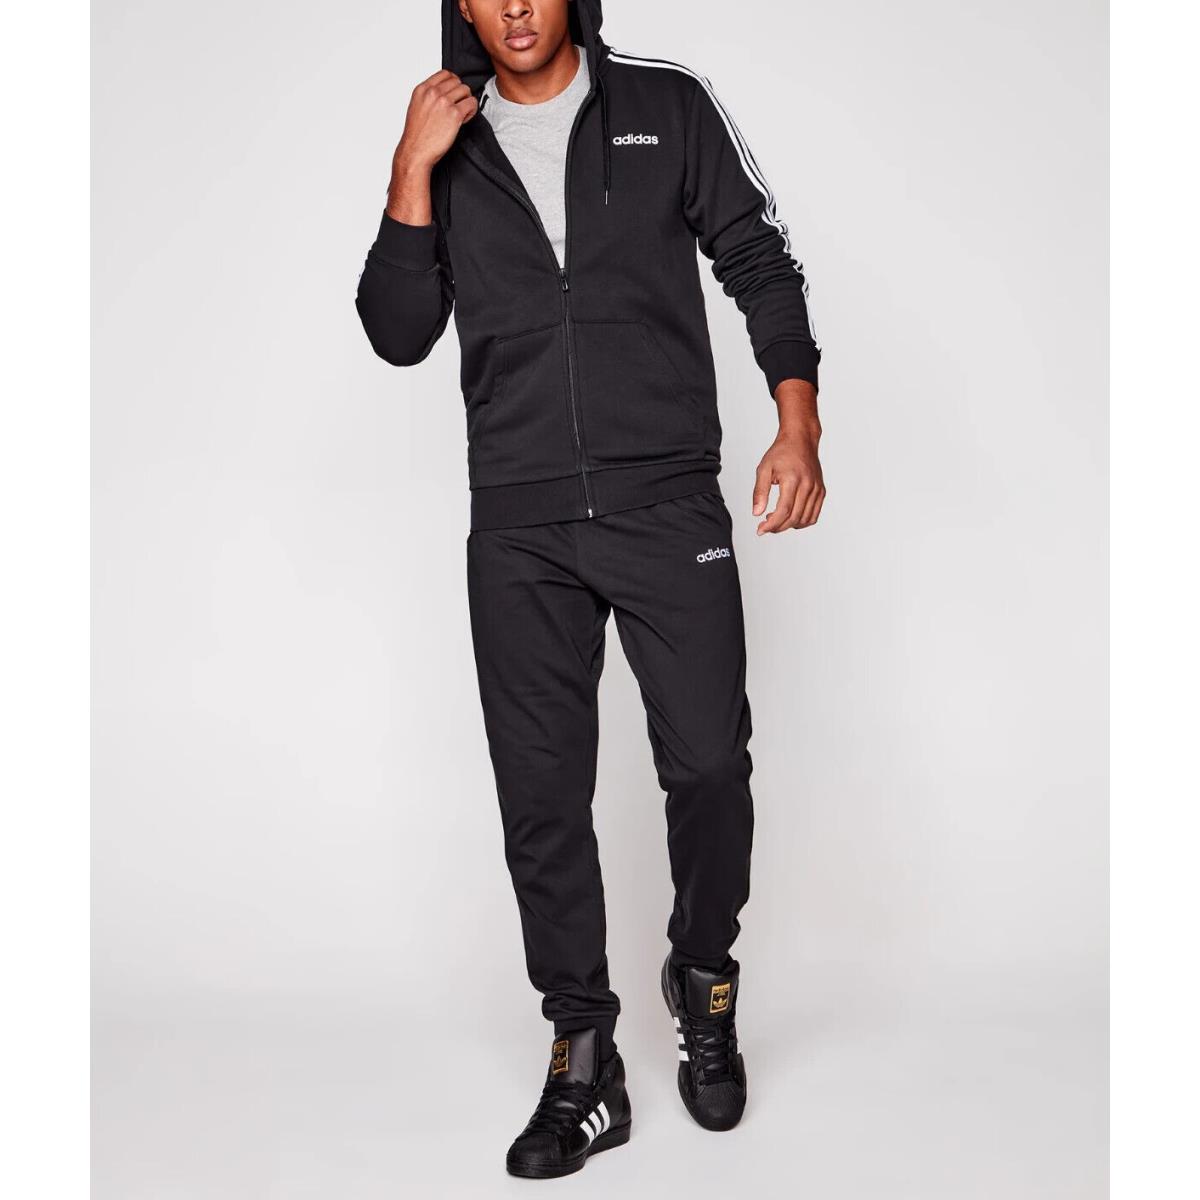 Adidas Men`s Gym French Terry Tracksuit 3 Stripe Pants Jacket Blk SZ M L XL 2XL